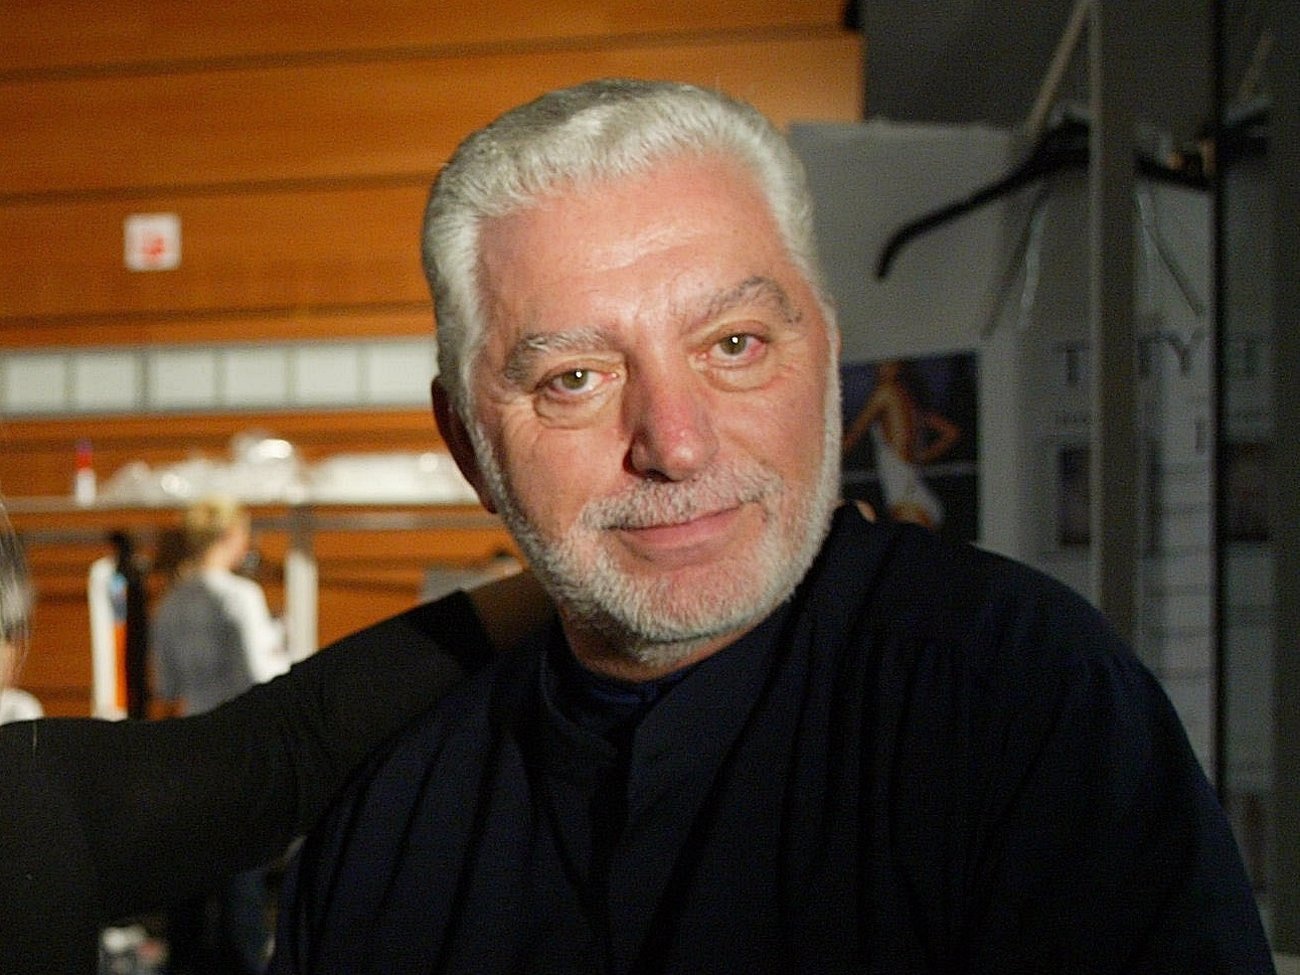 Fashion designer Paco Rabanne dies at 88 years old